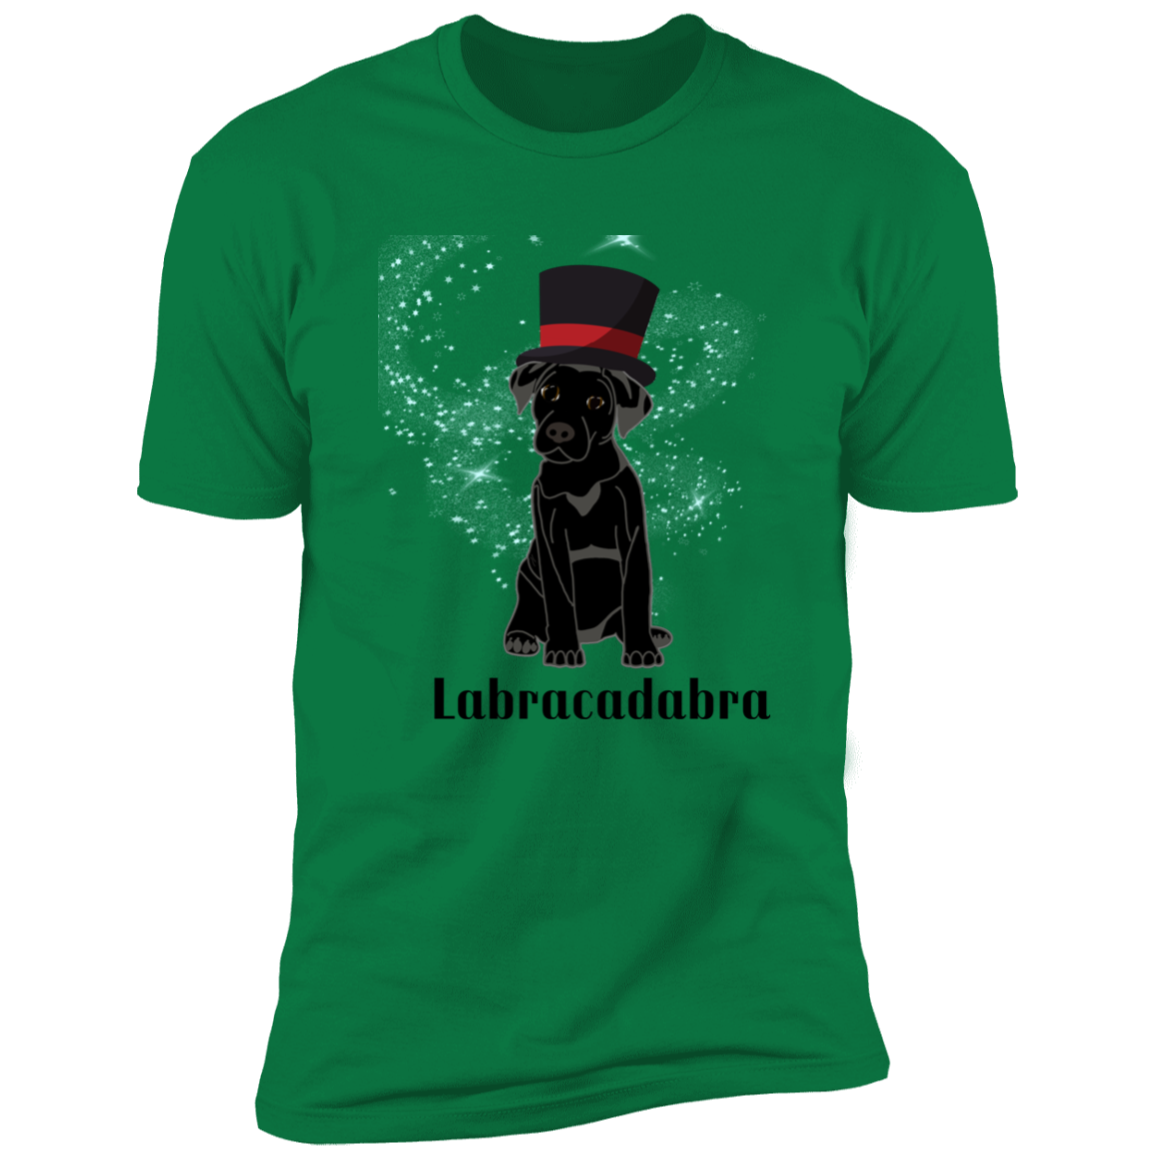 Labracadabra funny dog shirt, funny dog shirt for humans, funny labrador shirt. in kelly green